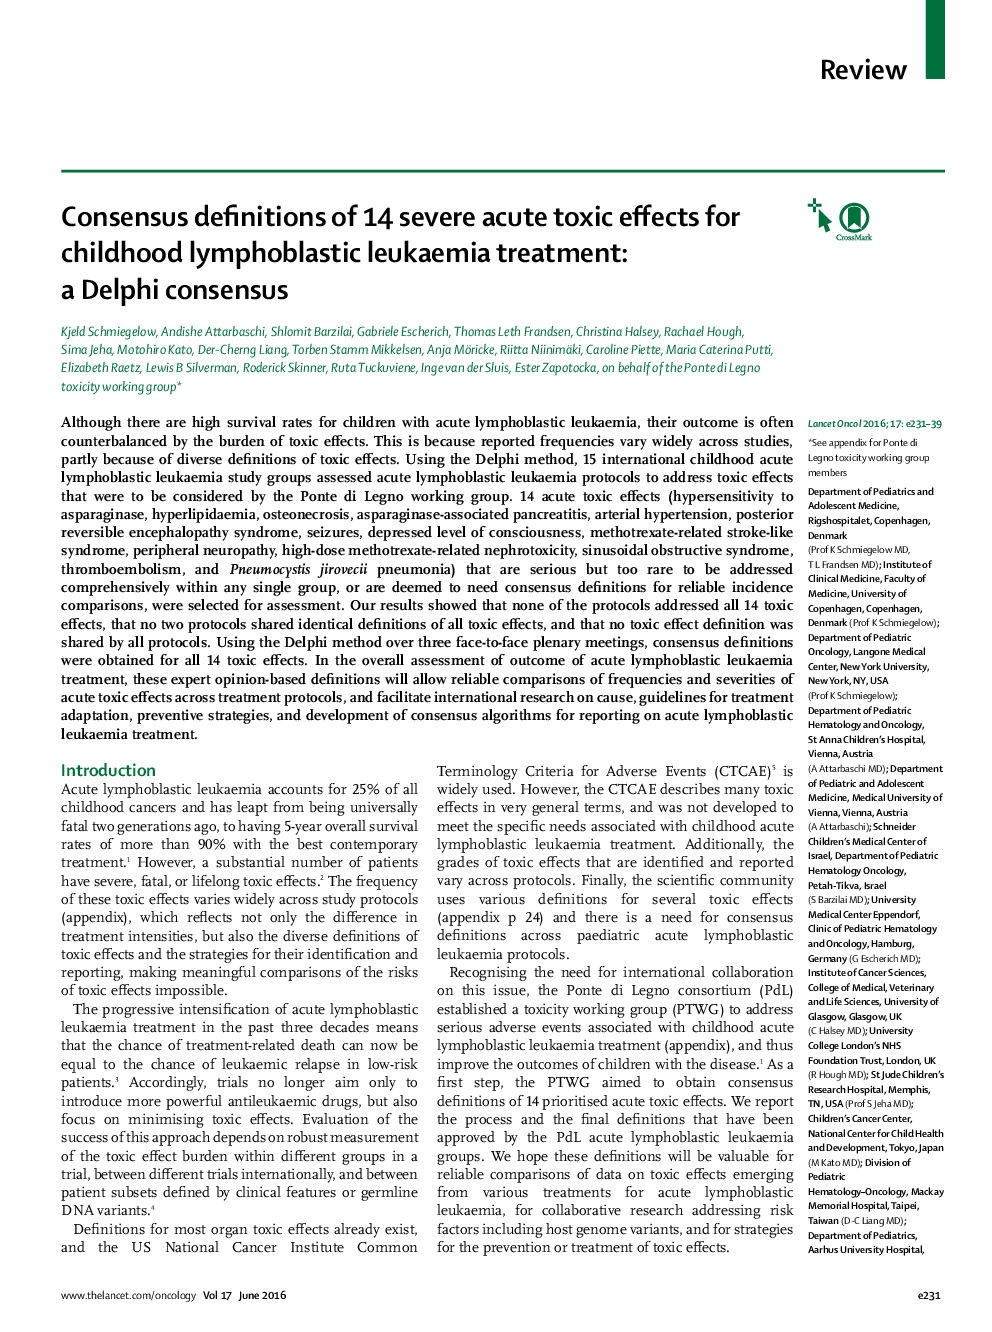 Consensus definitions of 14 severe acute toxic effects for childhood lymphoblastic leukaemia treatment: a Delphi consensus